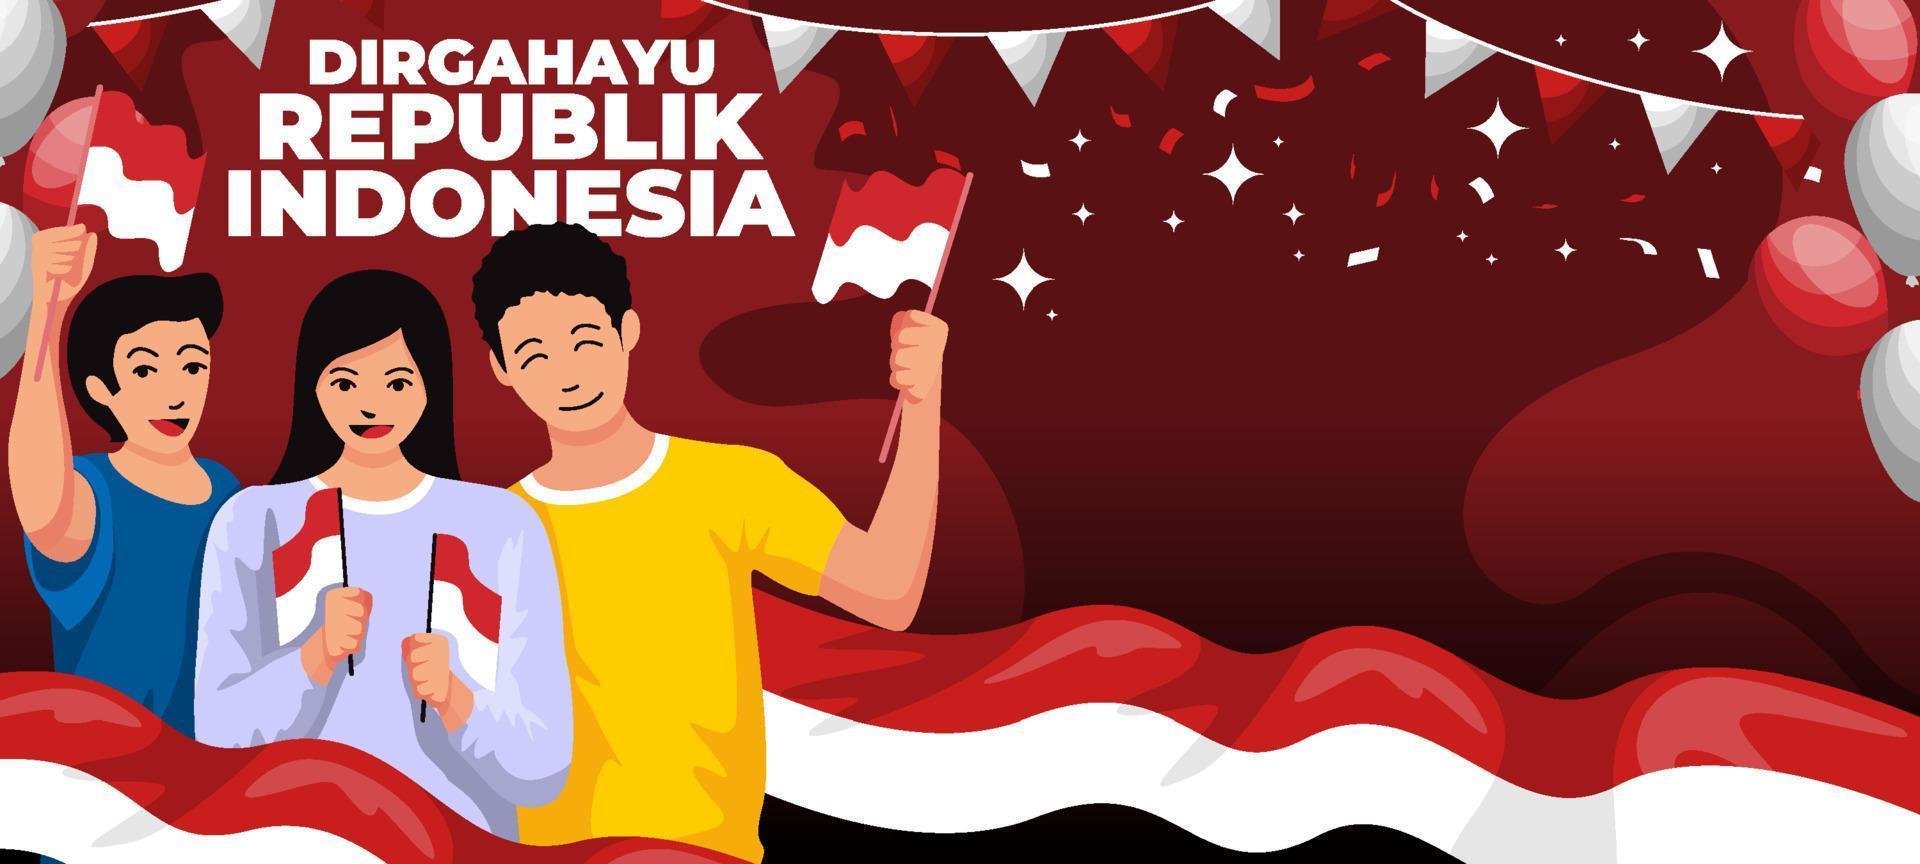 fond de hari kemerdekaan indonésie vecteur